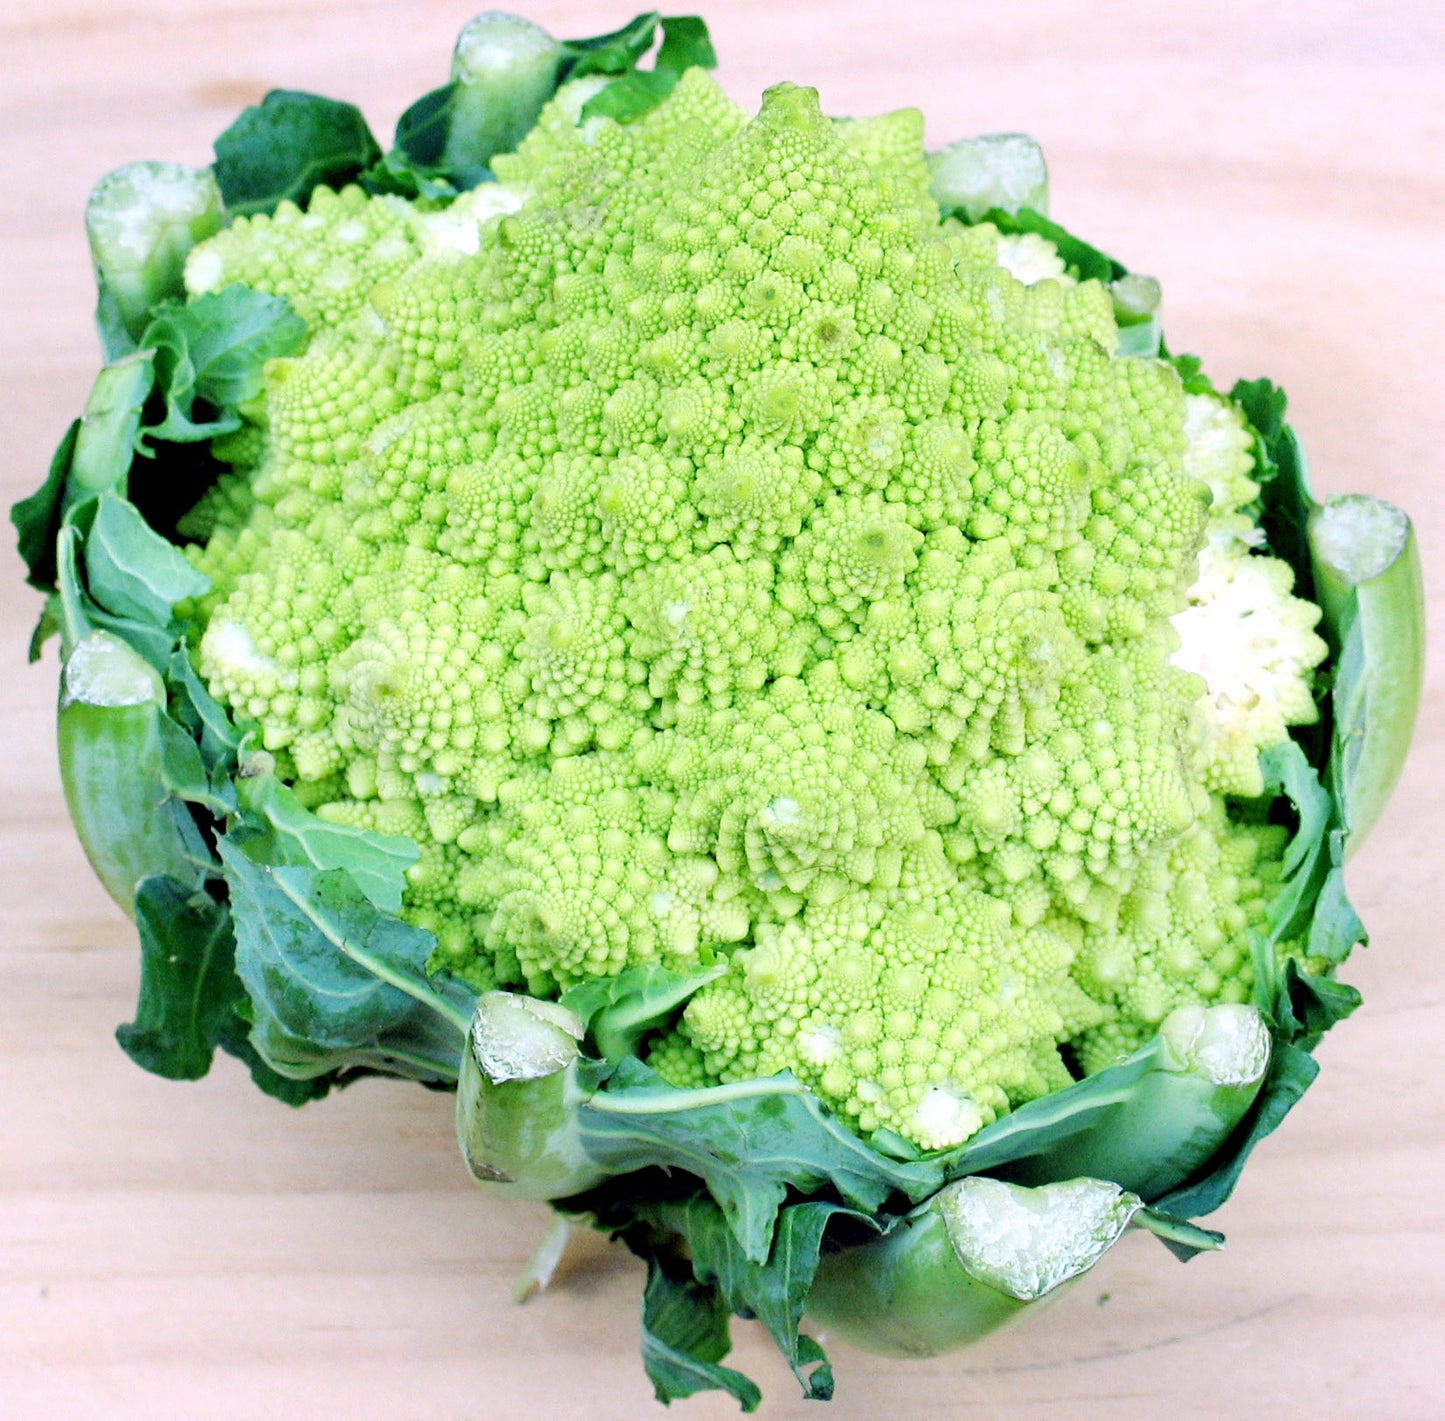 Broccoli Waltham 29 Broccoli (Brassica oleracea ssp. var italica var. Waltham 29)